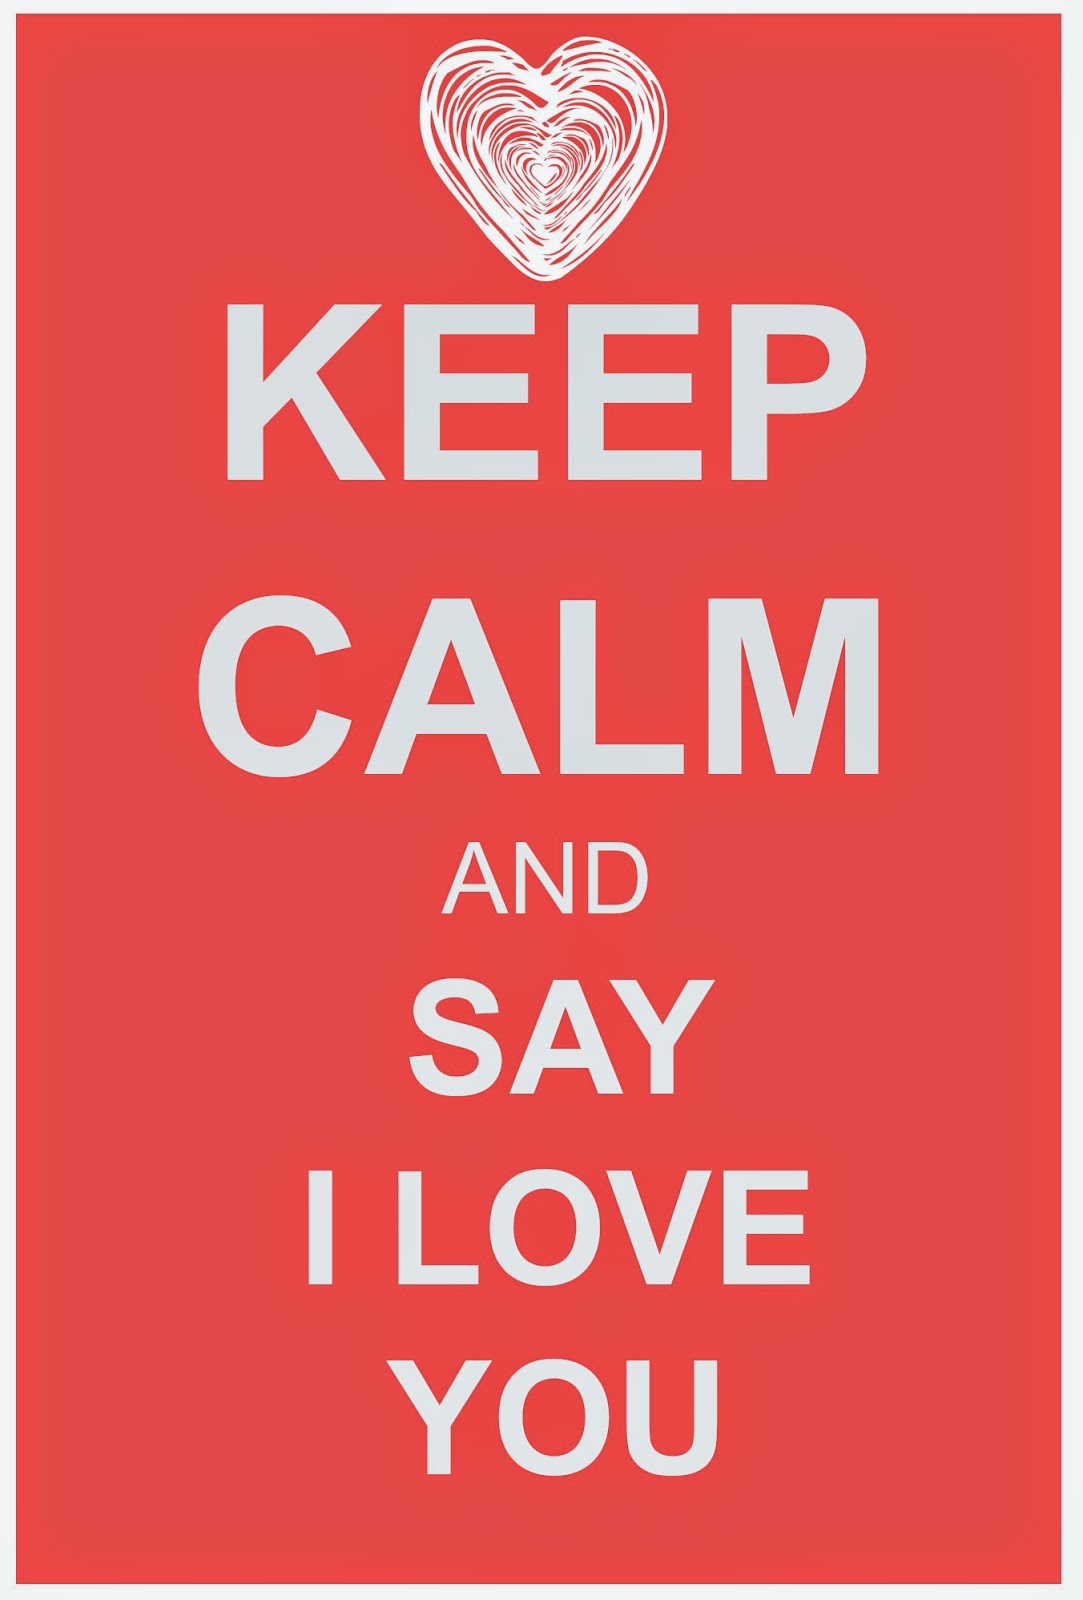 Keep calm and say i love you